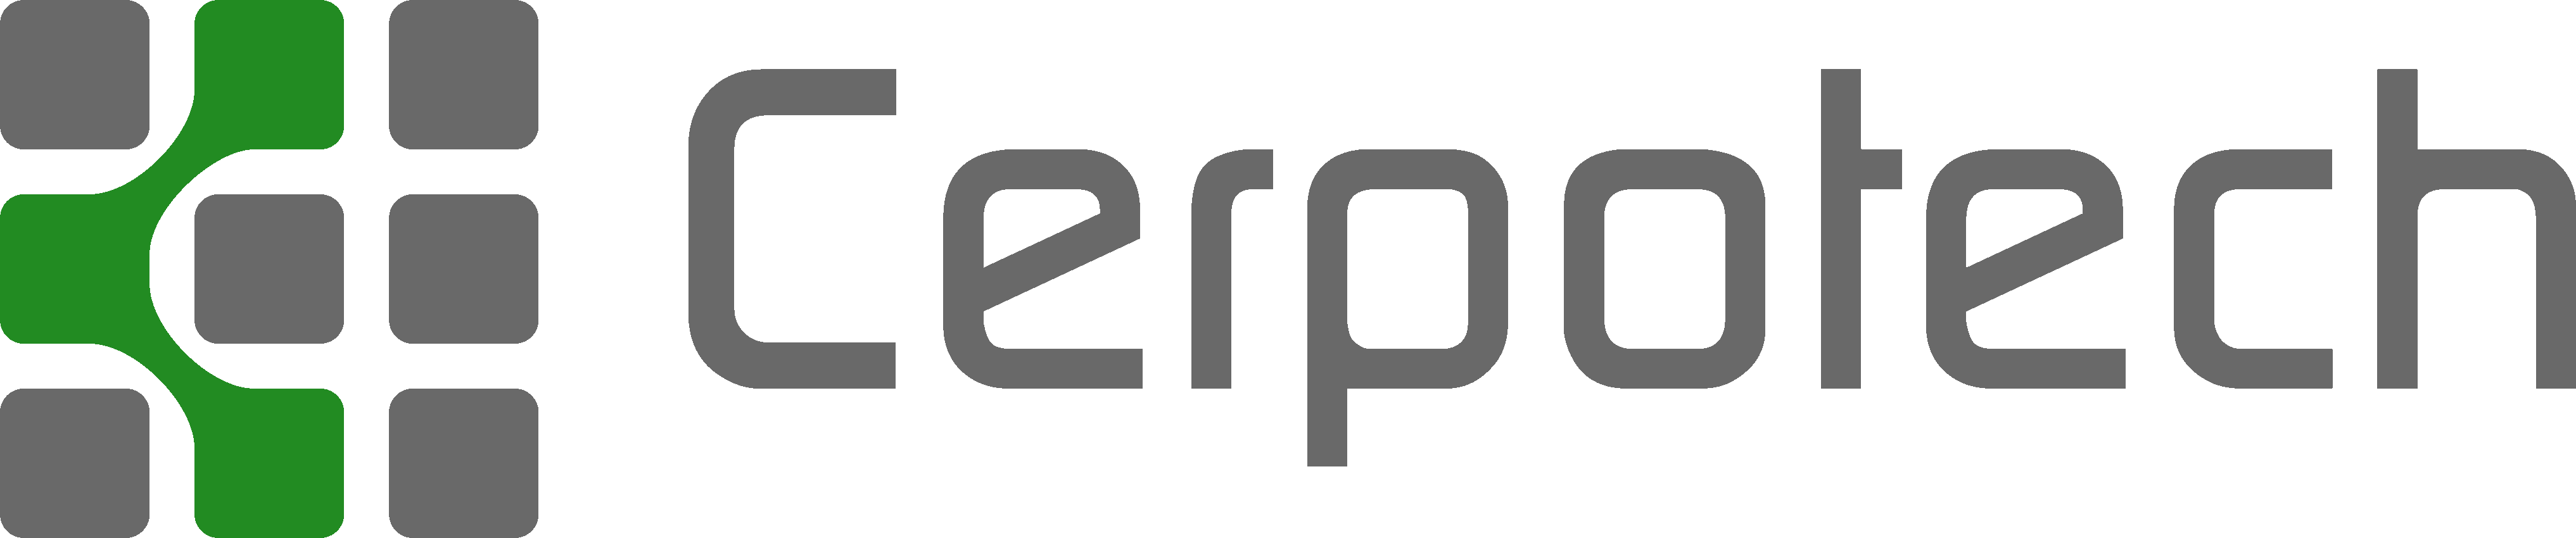 Cerpotech logo